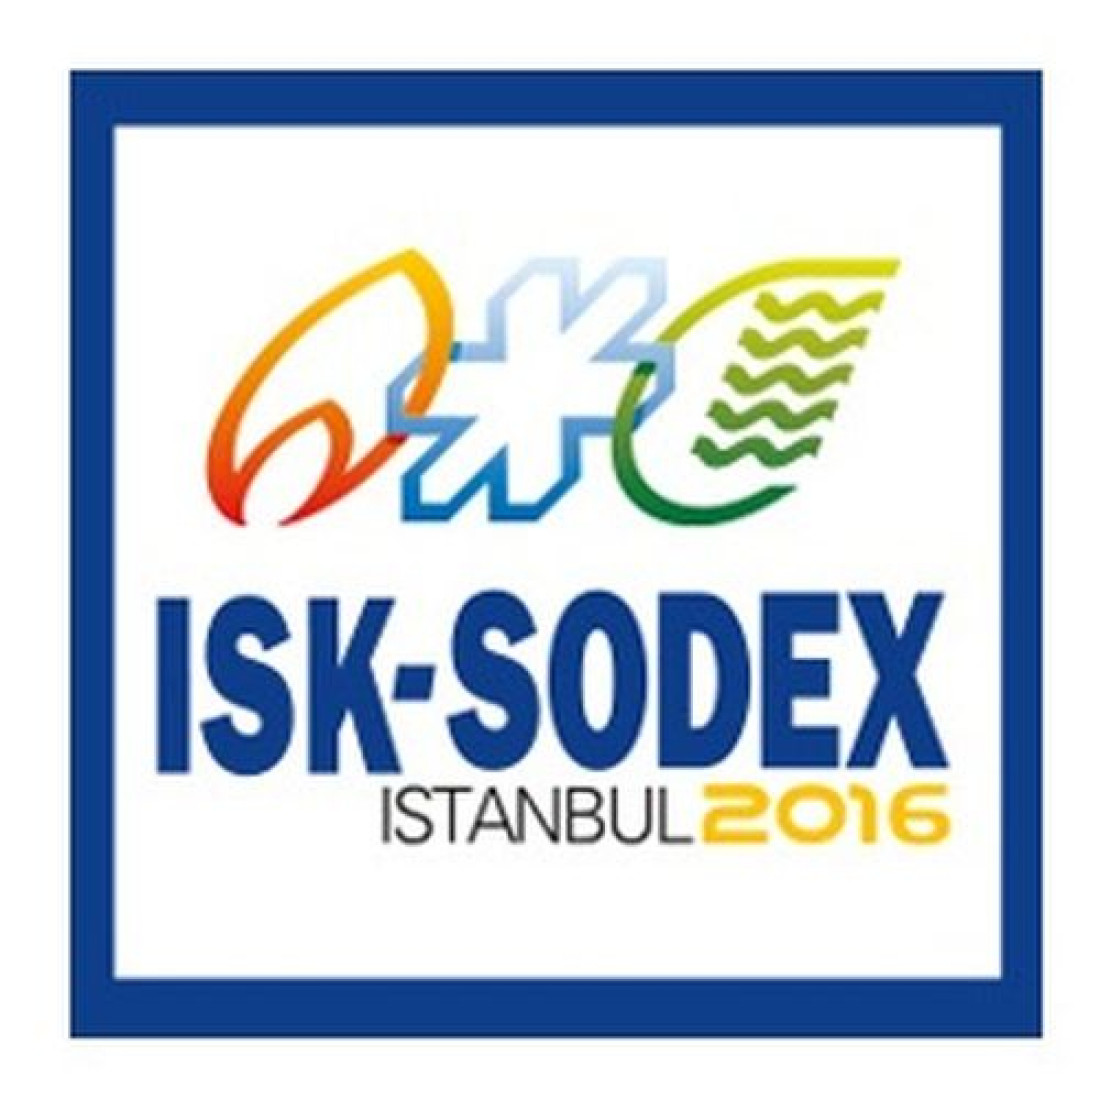 Aquafilter zaprasza na Targi ISK-SODEX ISTANBUL 2016